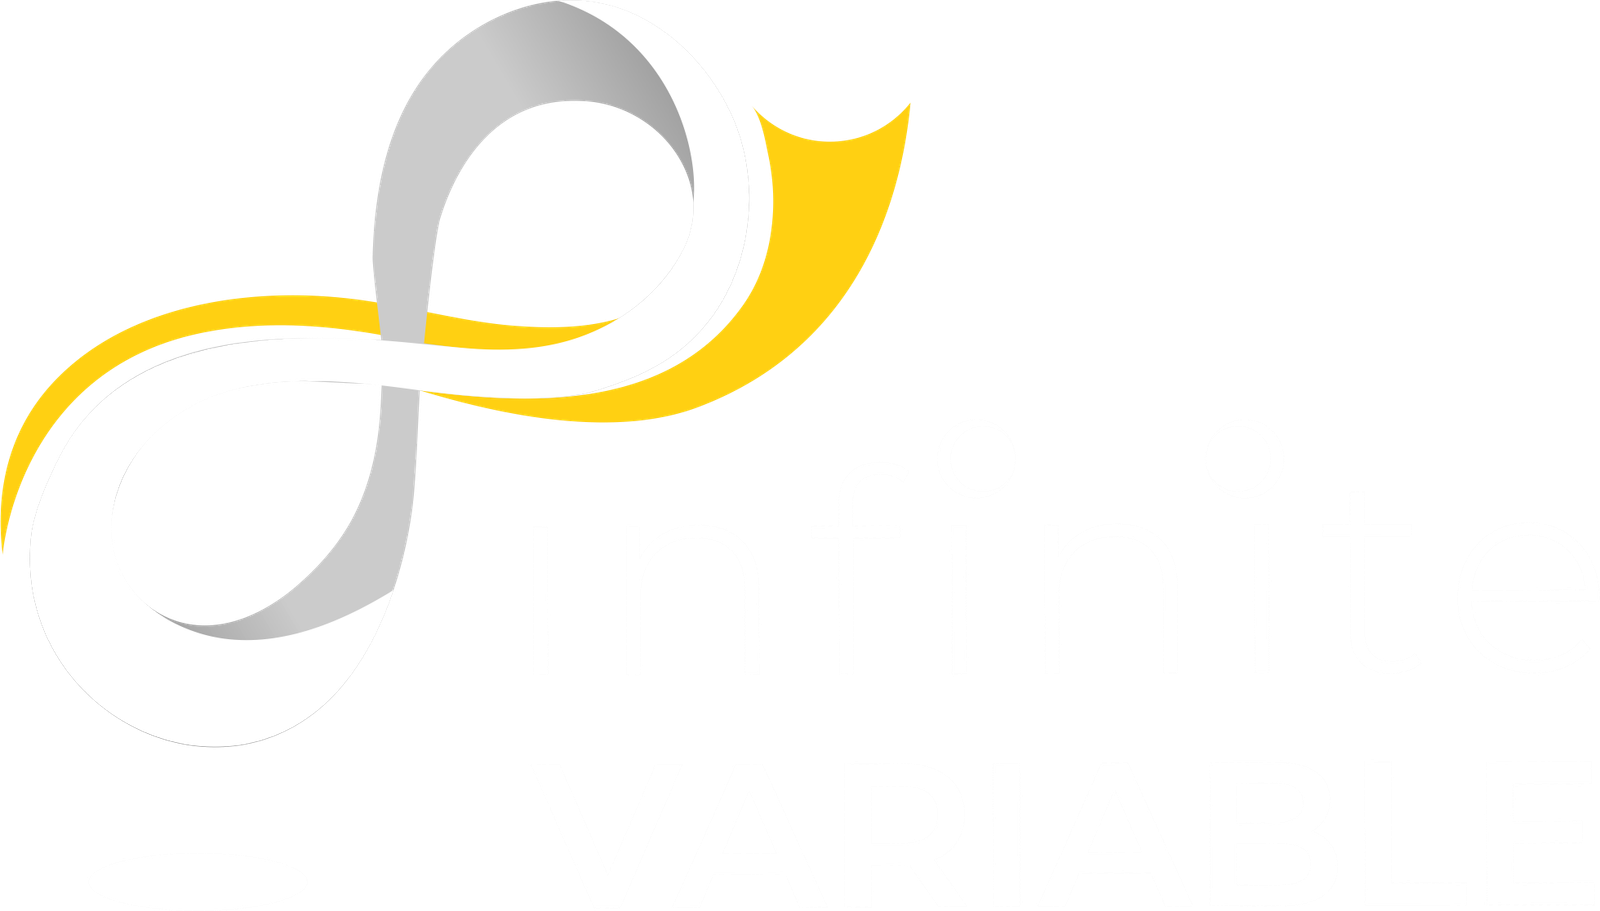 Copy of infinite VARIABLE logo - white